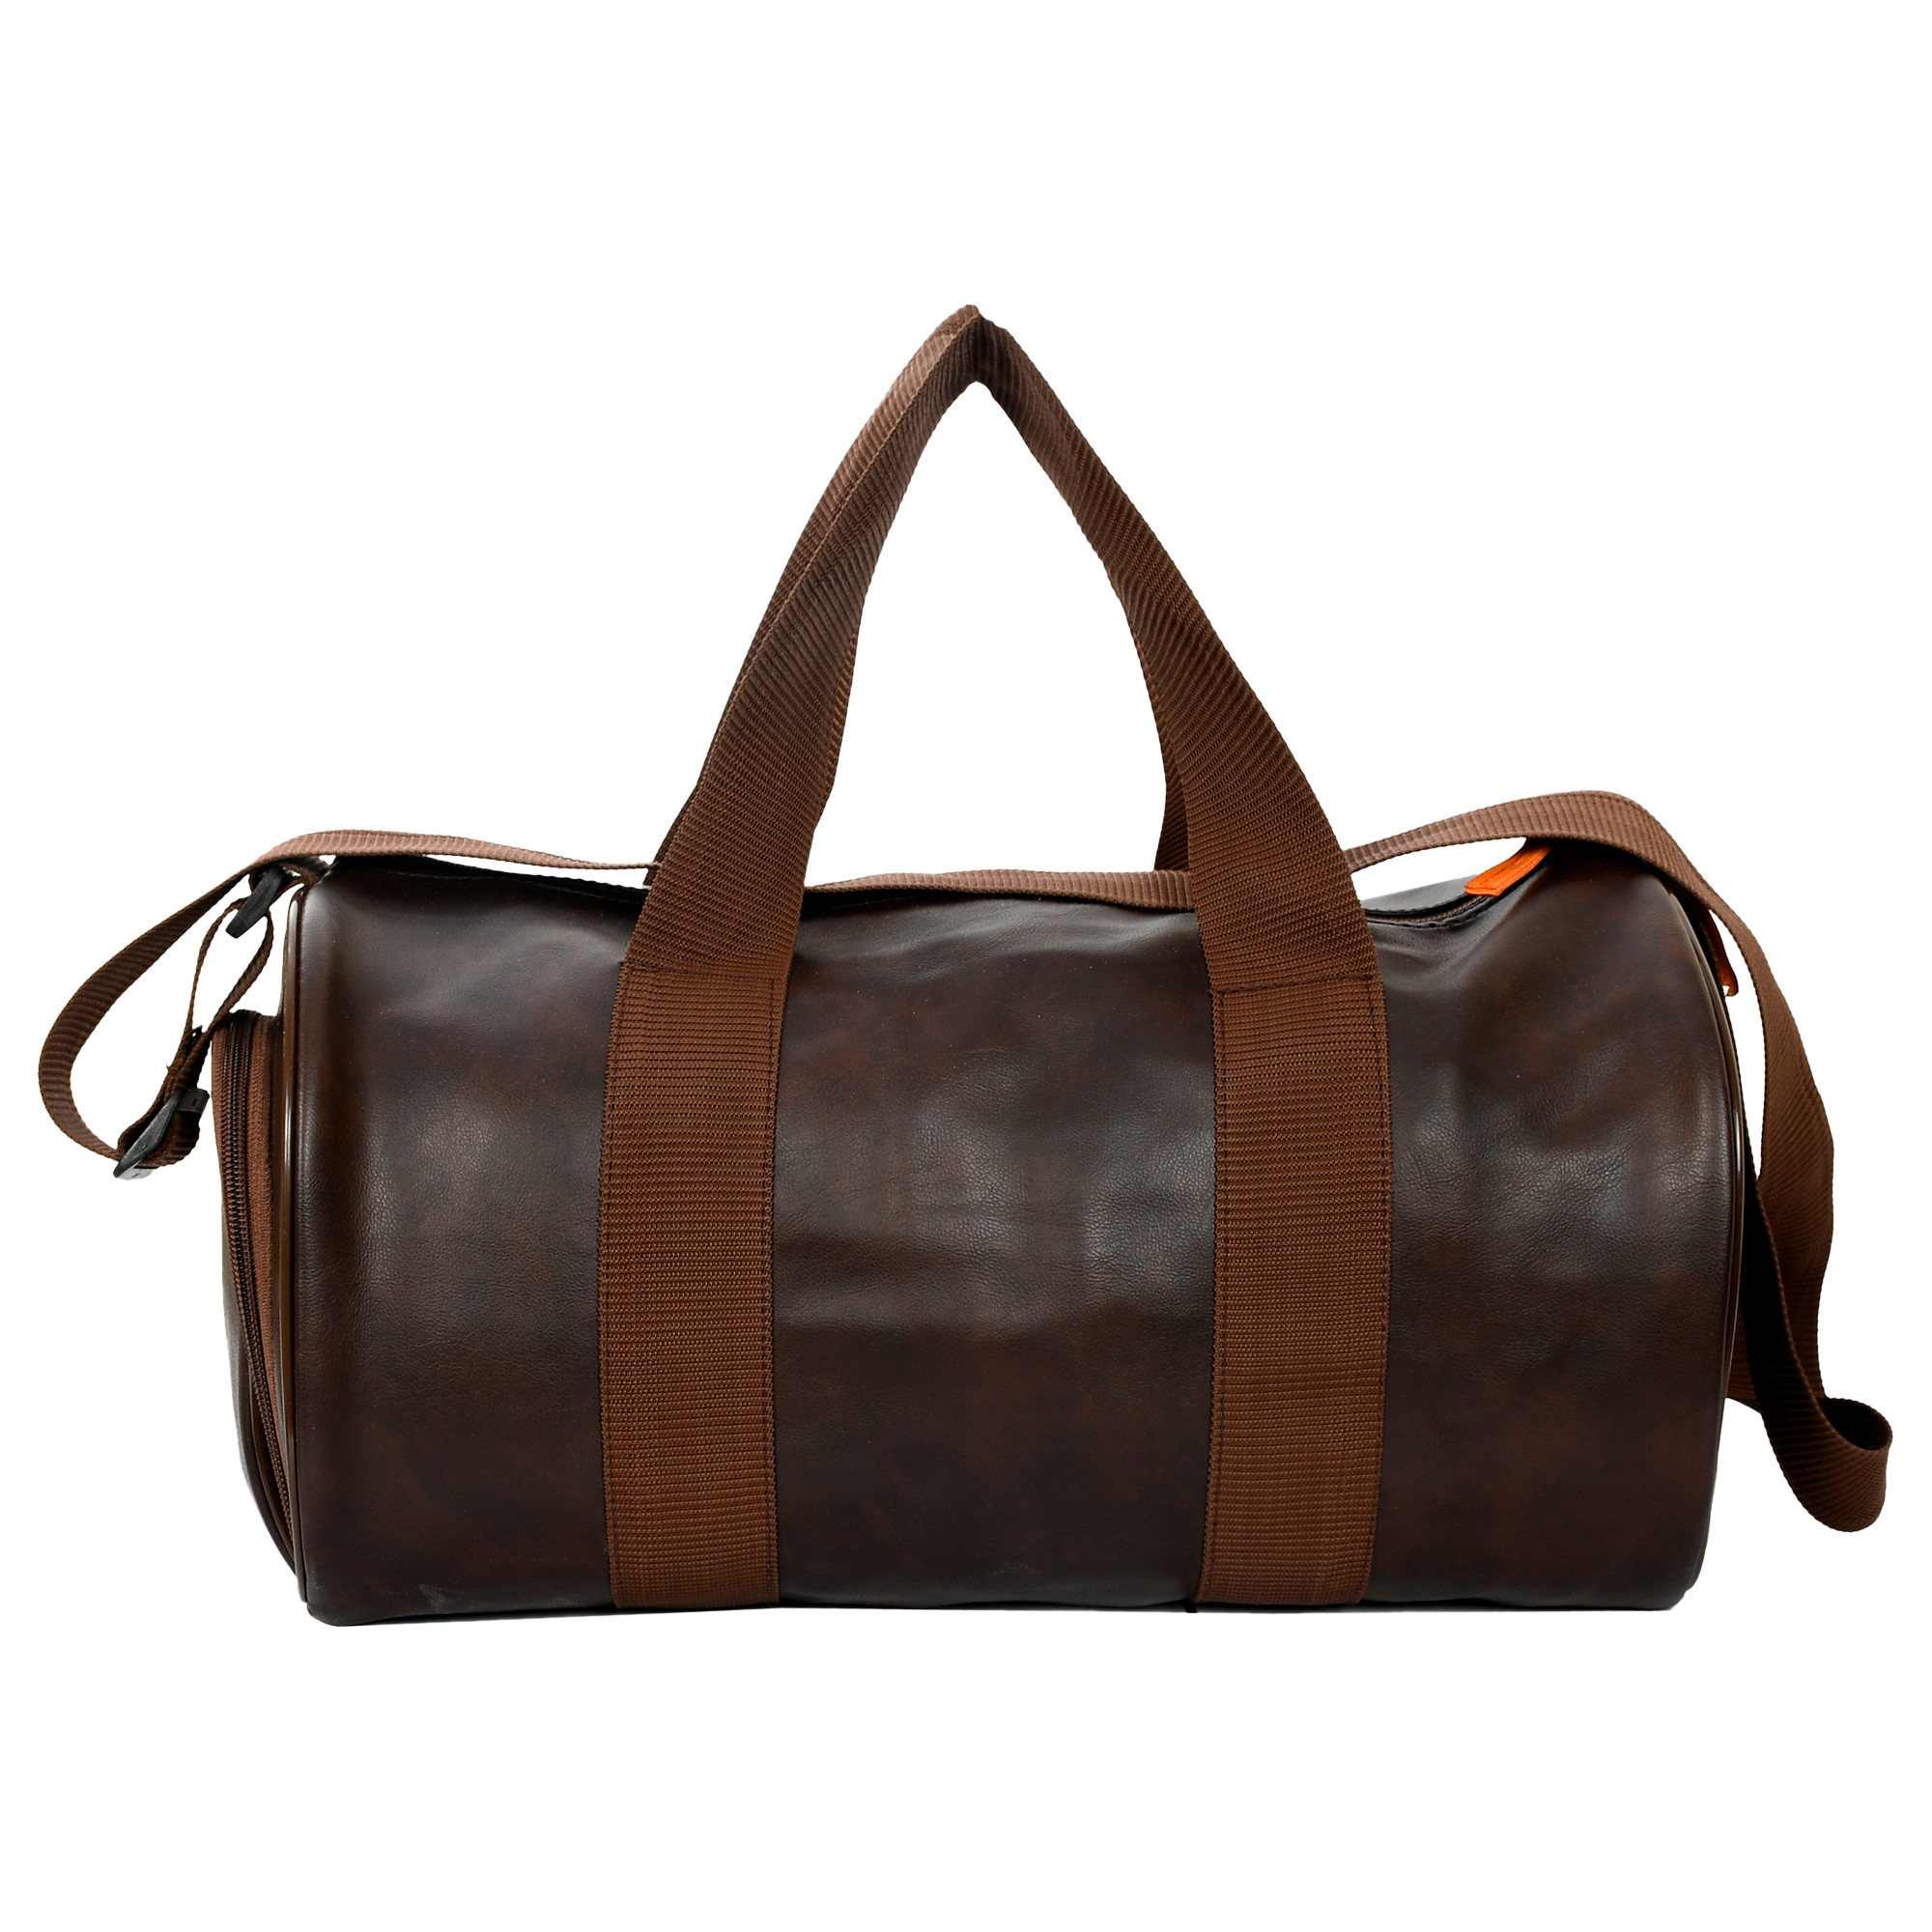 Kuber Industries Gym Bag | Leather Gym Bag for Man | Sports Gym Bag | Fitness Bag | Gym Bag with Adjustable Strap | Shoe Compartment Gym Bags | Brown